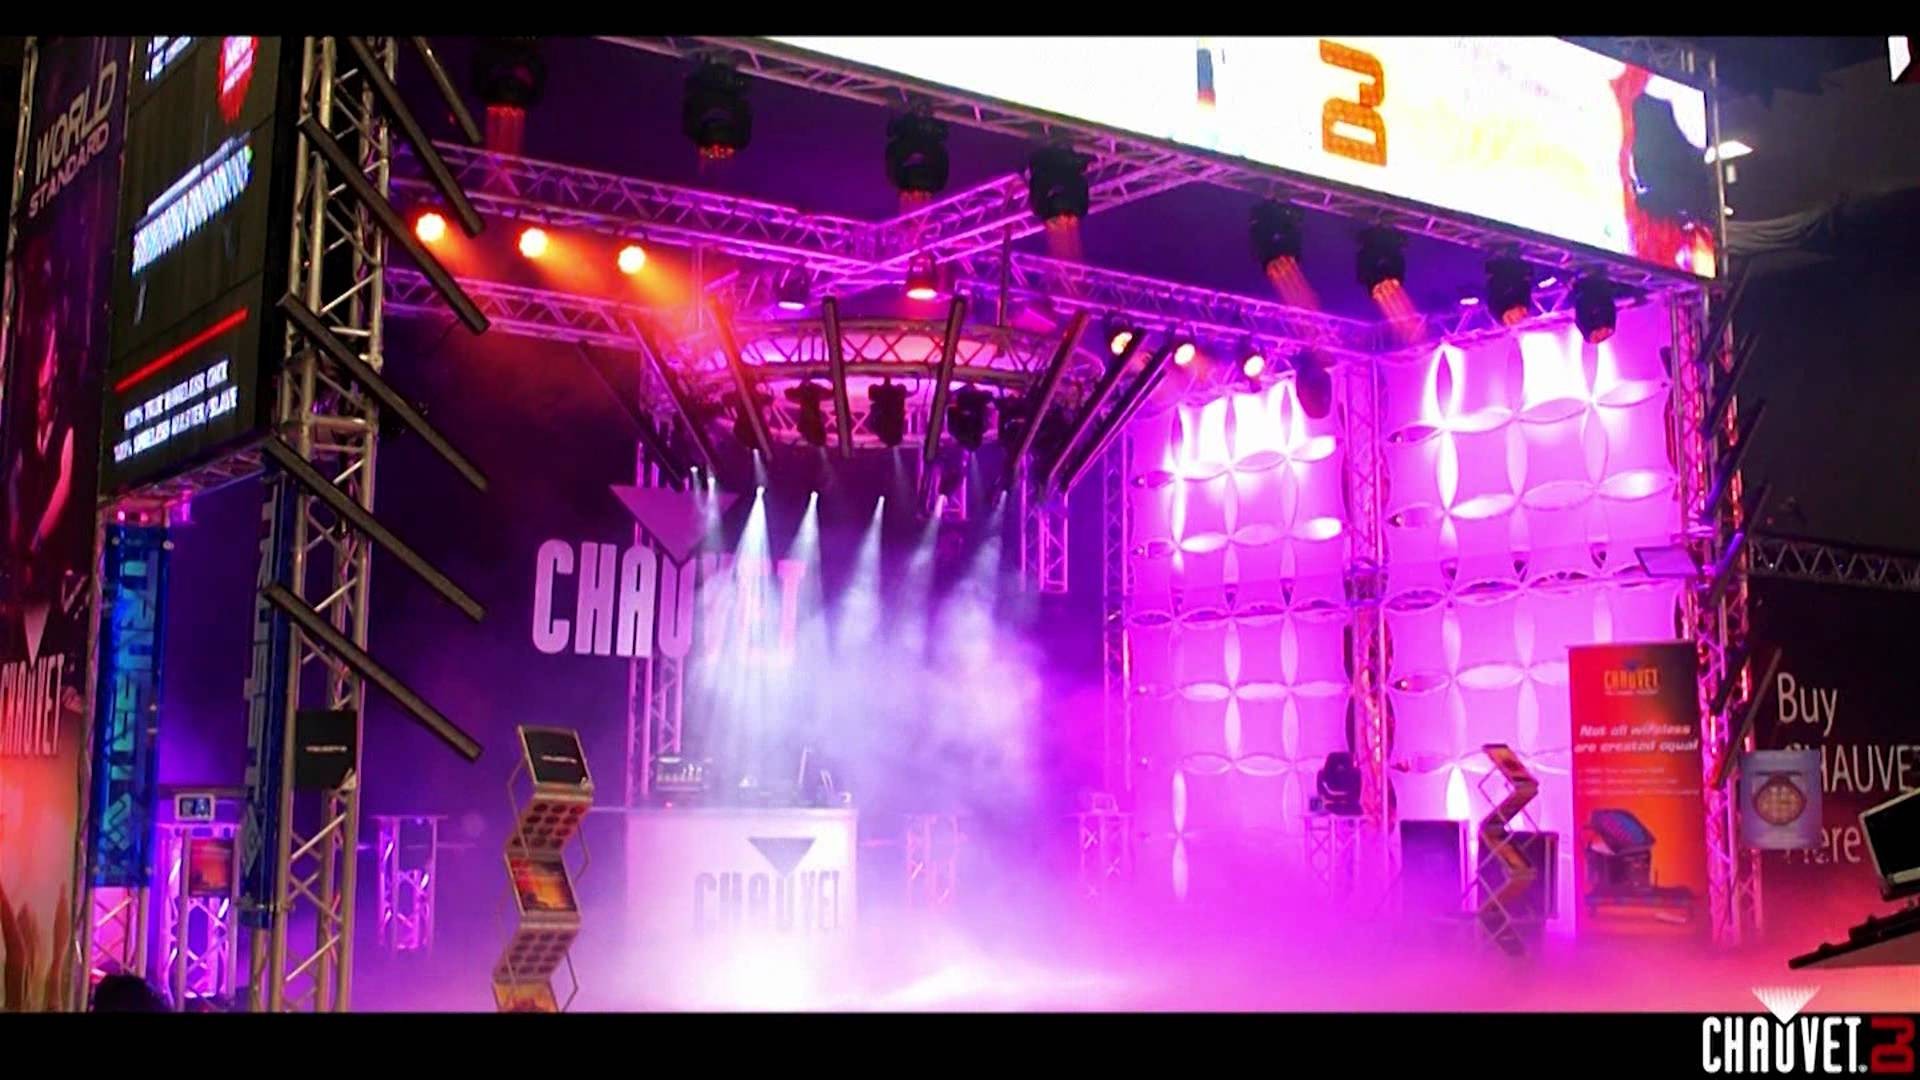 CHAUVET DJ Programmed Light Show at the 2012 DJ Expo